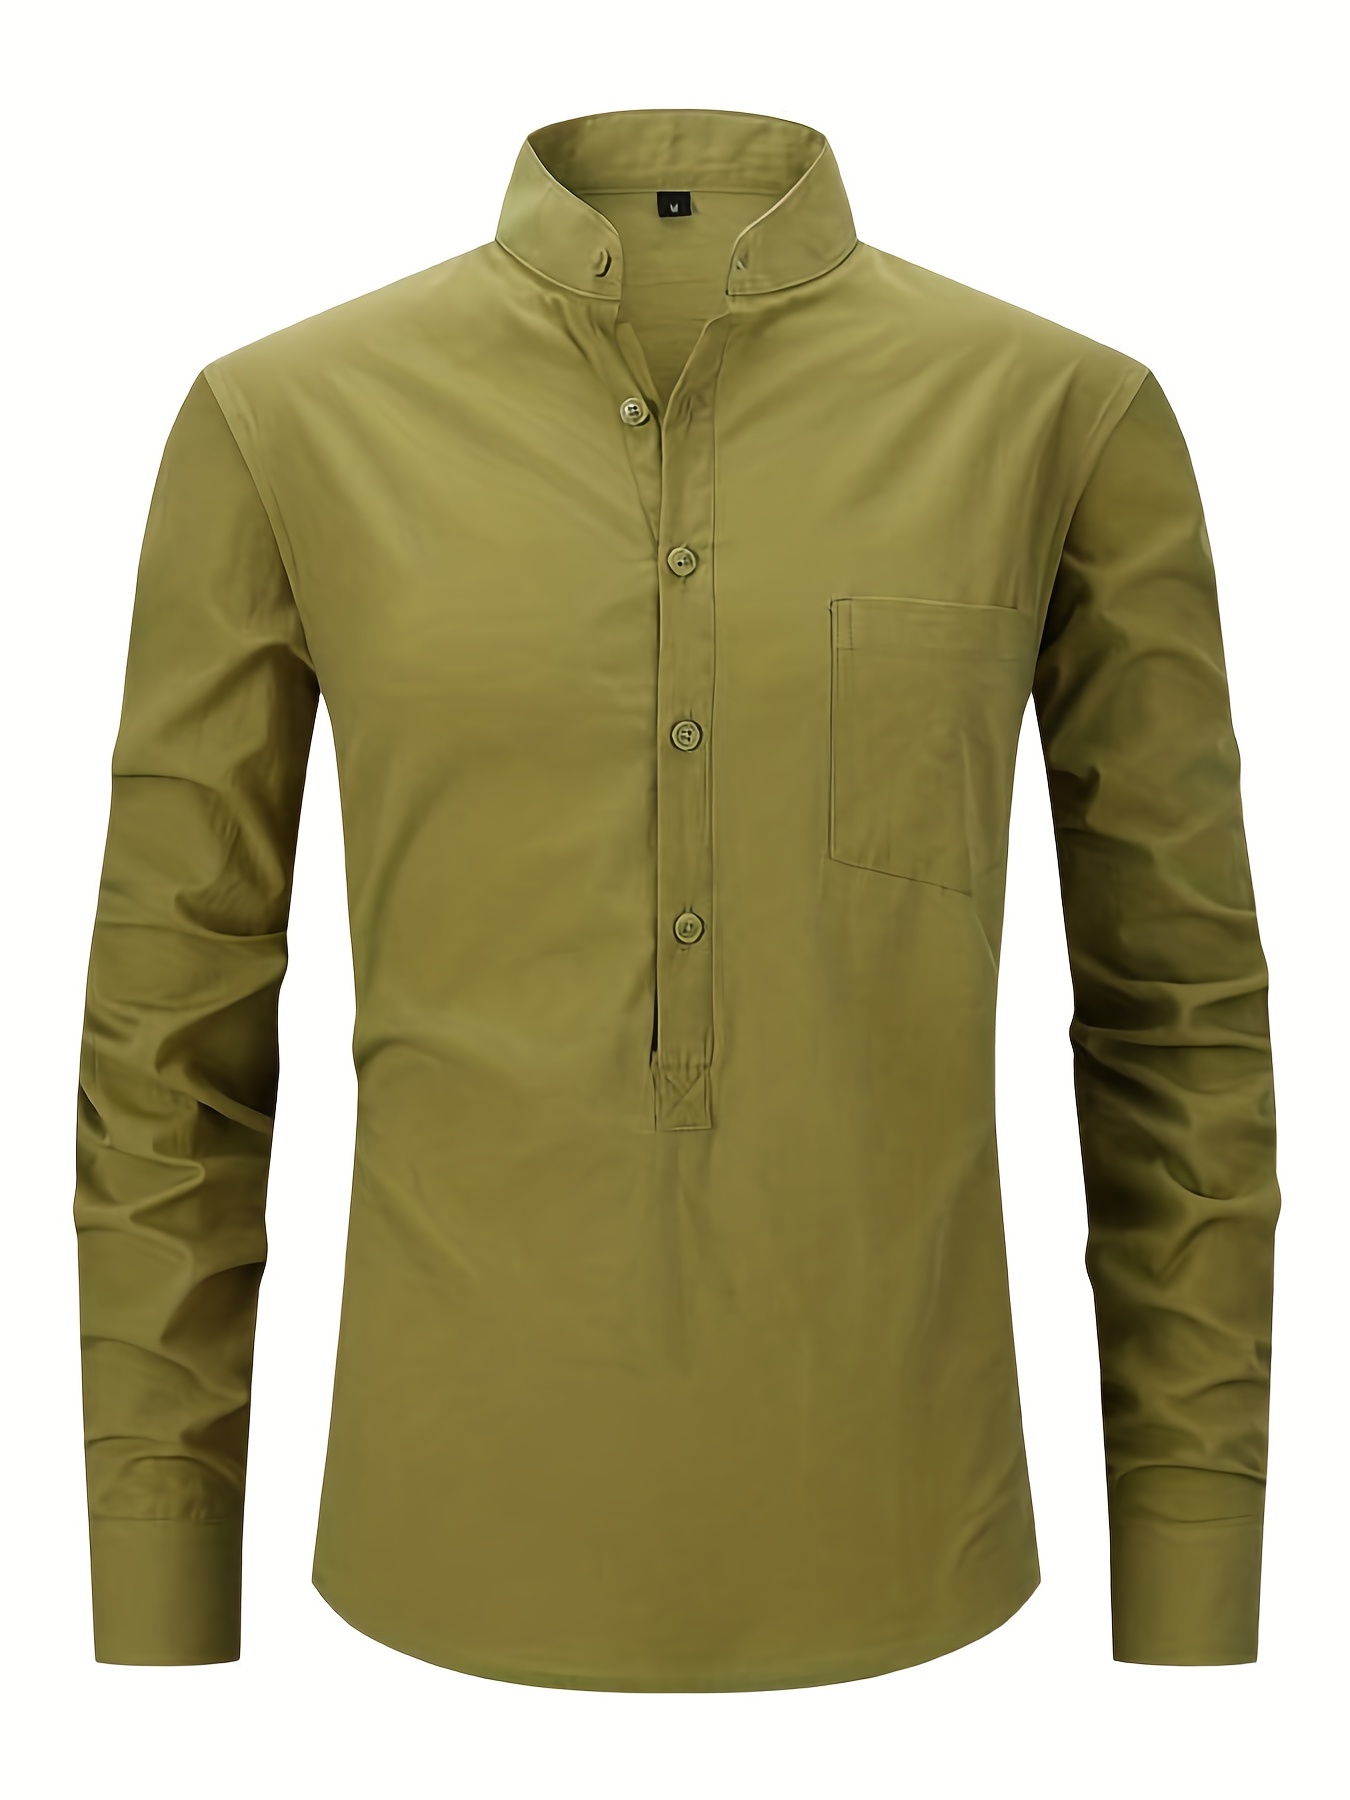 Men's Shirt Solid Long Sleeve Cotton Linen Shirts Autumn Casual